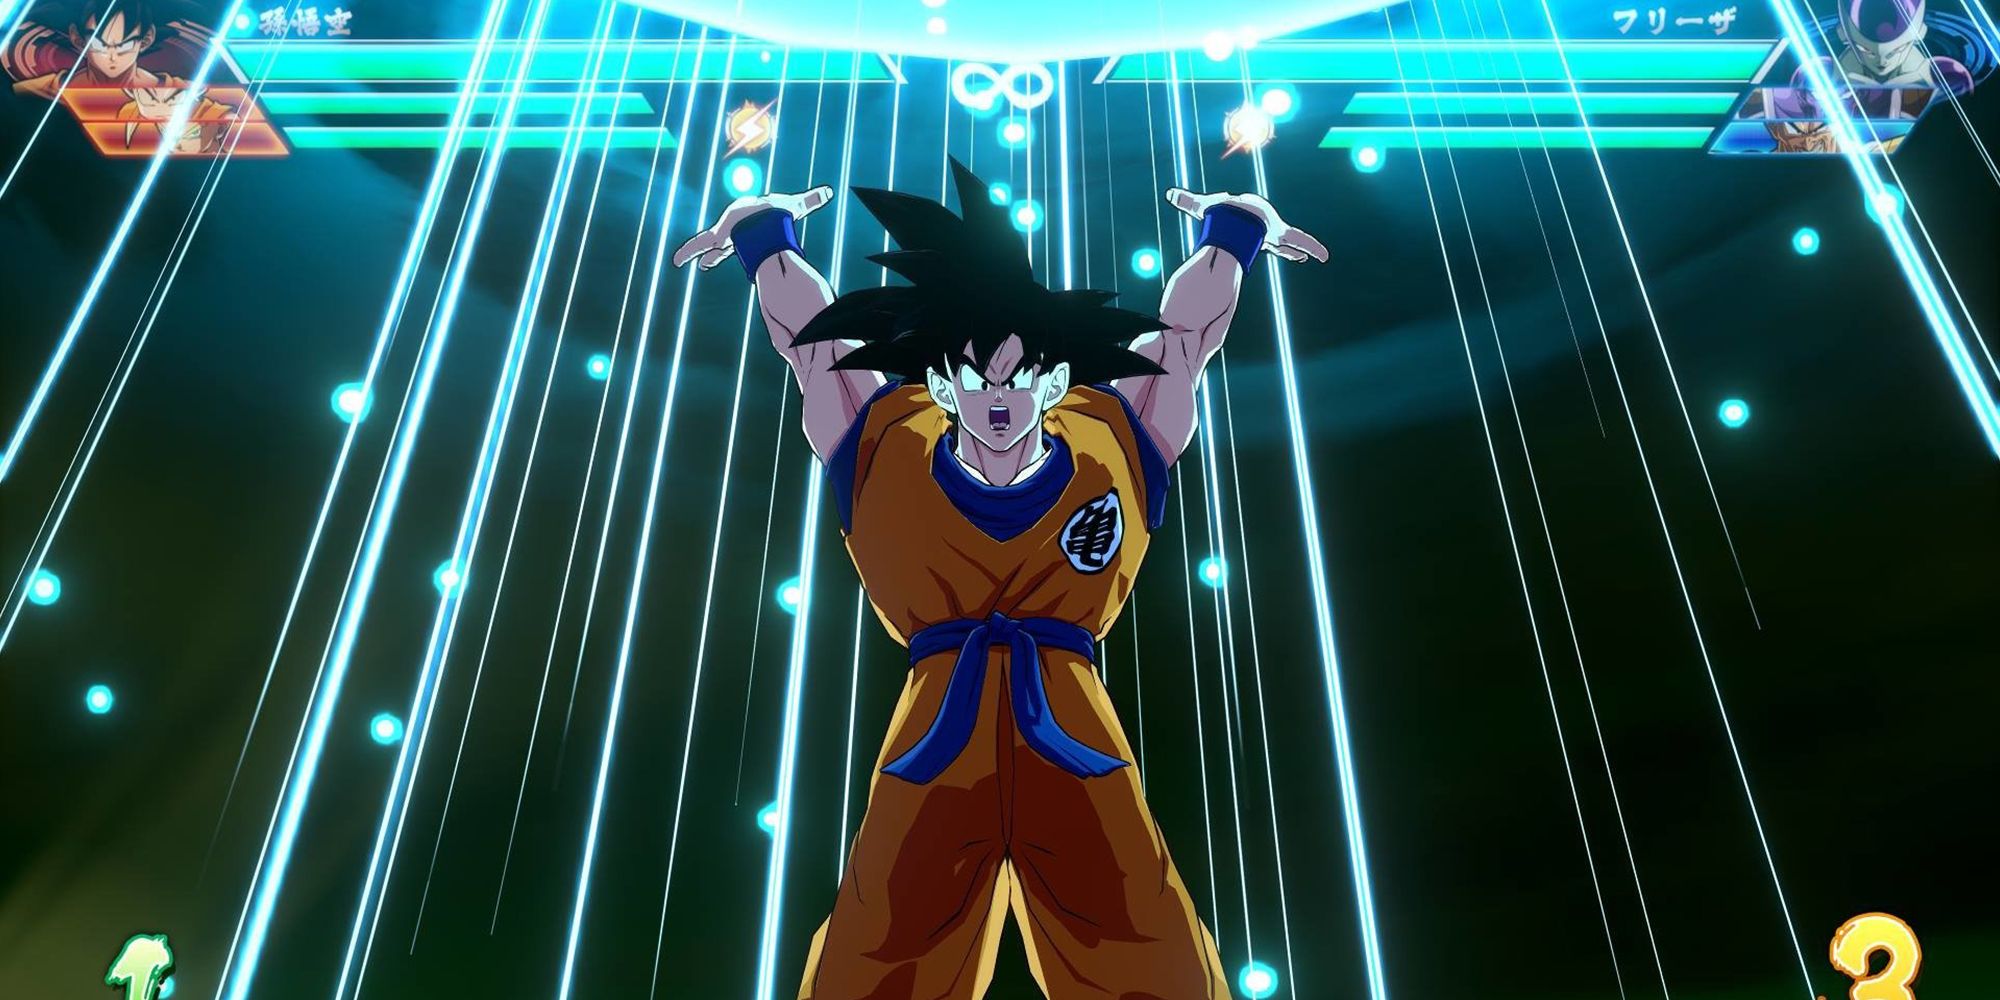 Regular Base Form Goku performing a Spirit Bomb from Dragon Ball FighterZ